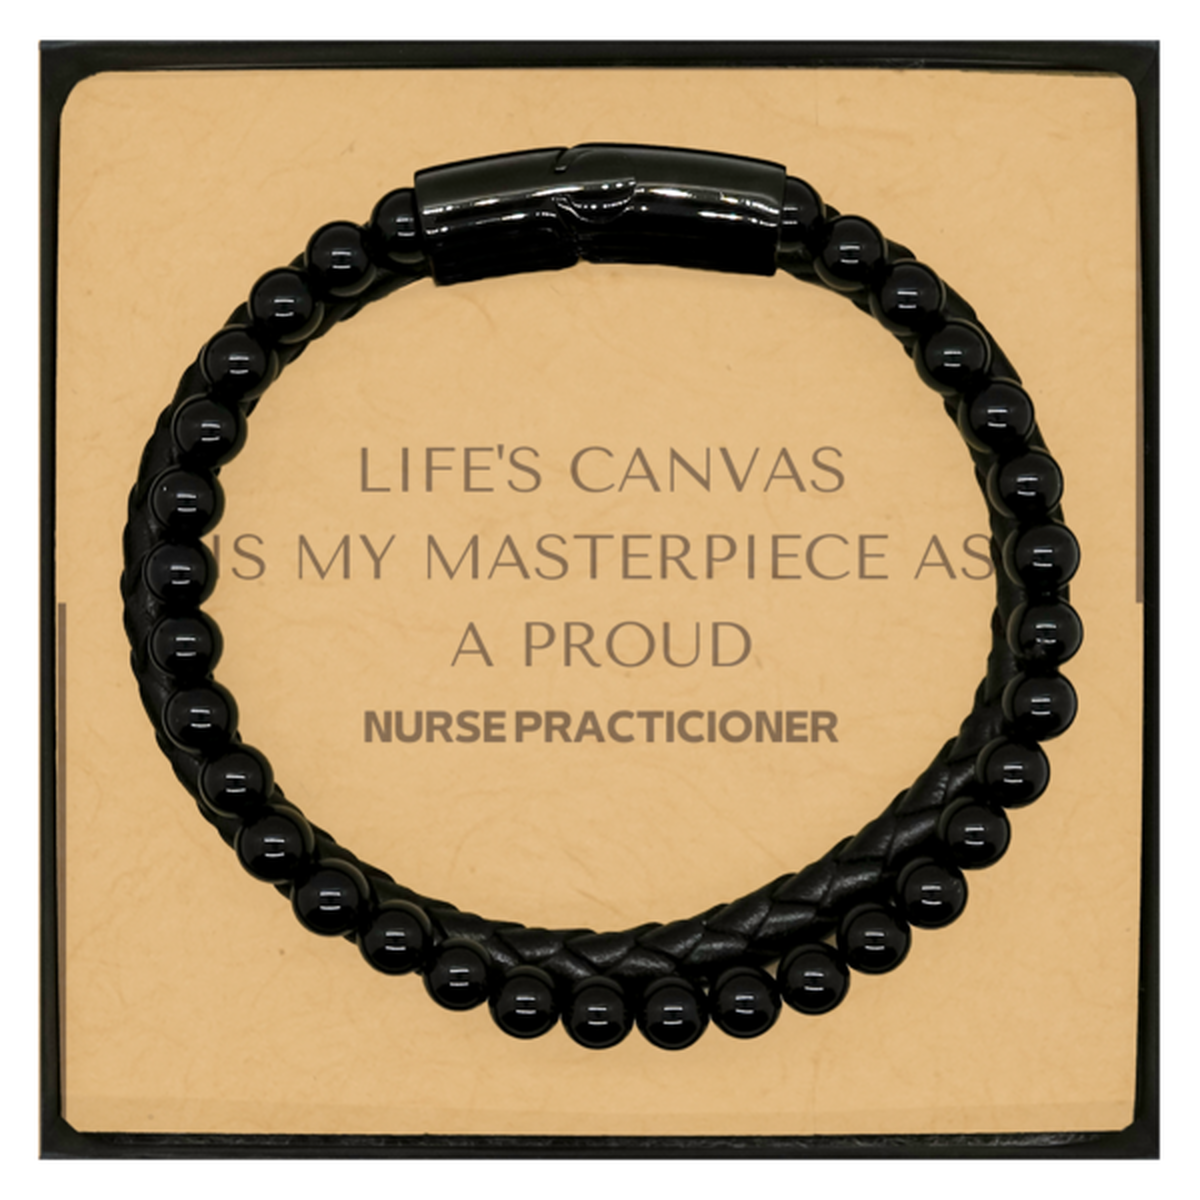 Proud Nurse Practicioner Gifts, Life's canvas is my masterpiece, Epic Birthday Christmas Unique Stone Leather Bracelets For Nurse Practicioner, Coworkers, Men, Women, Friends